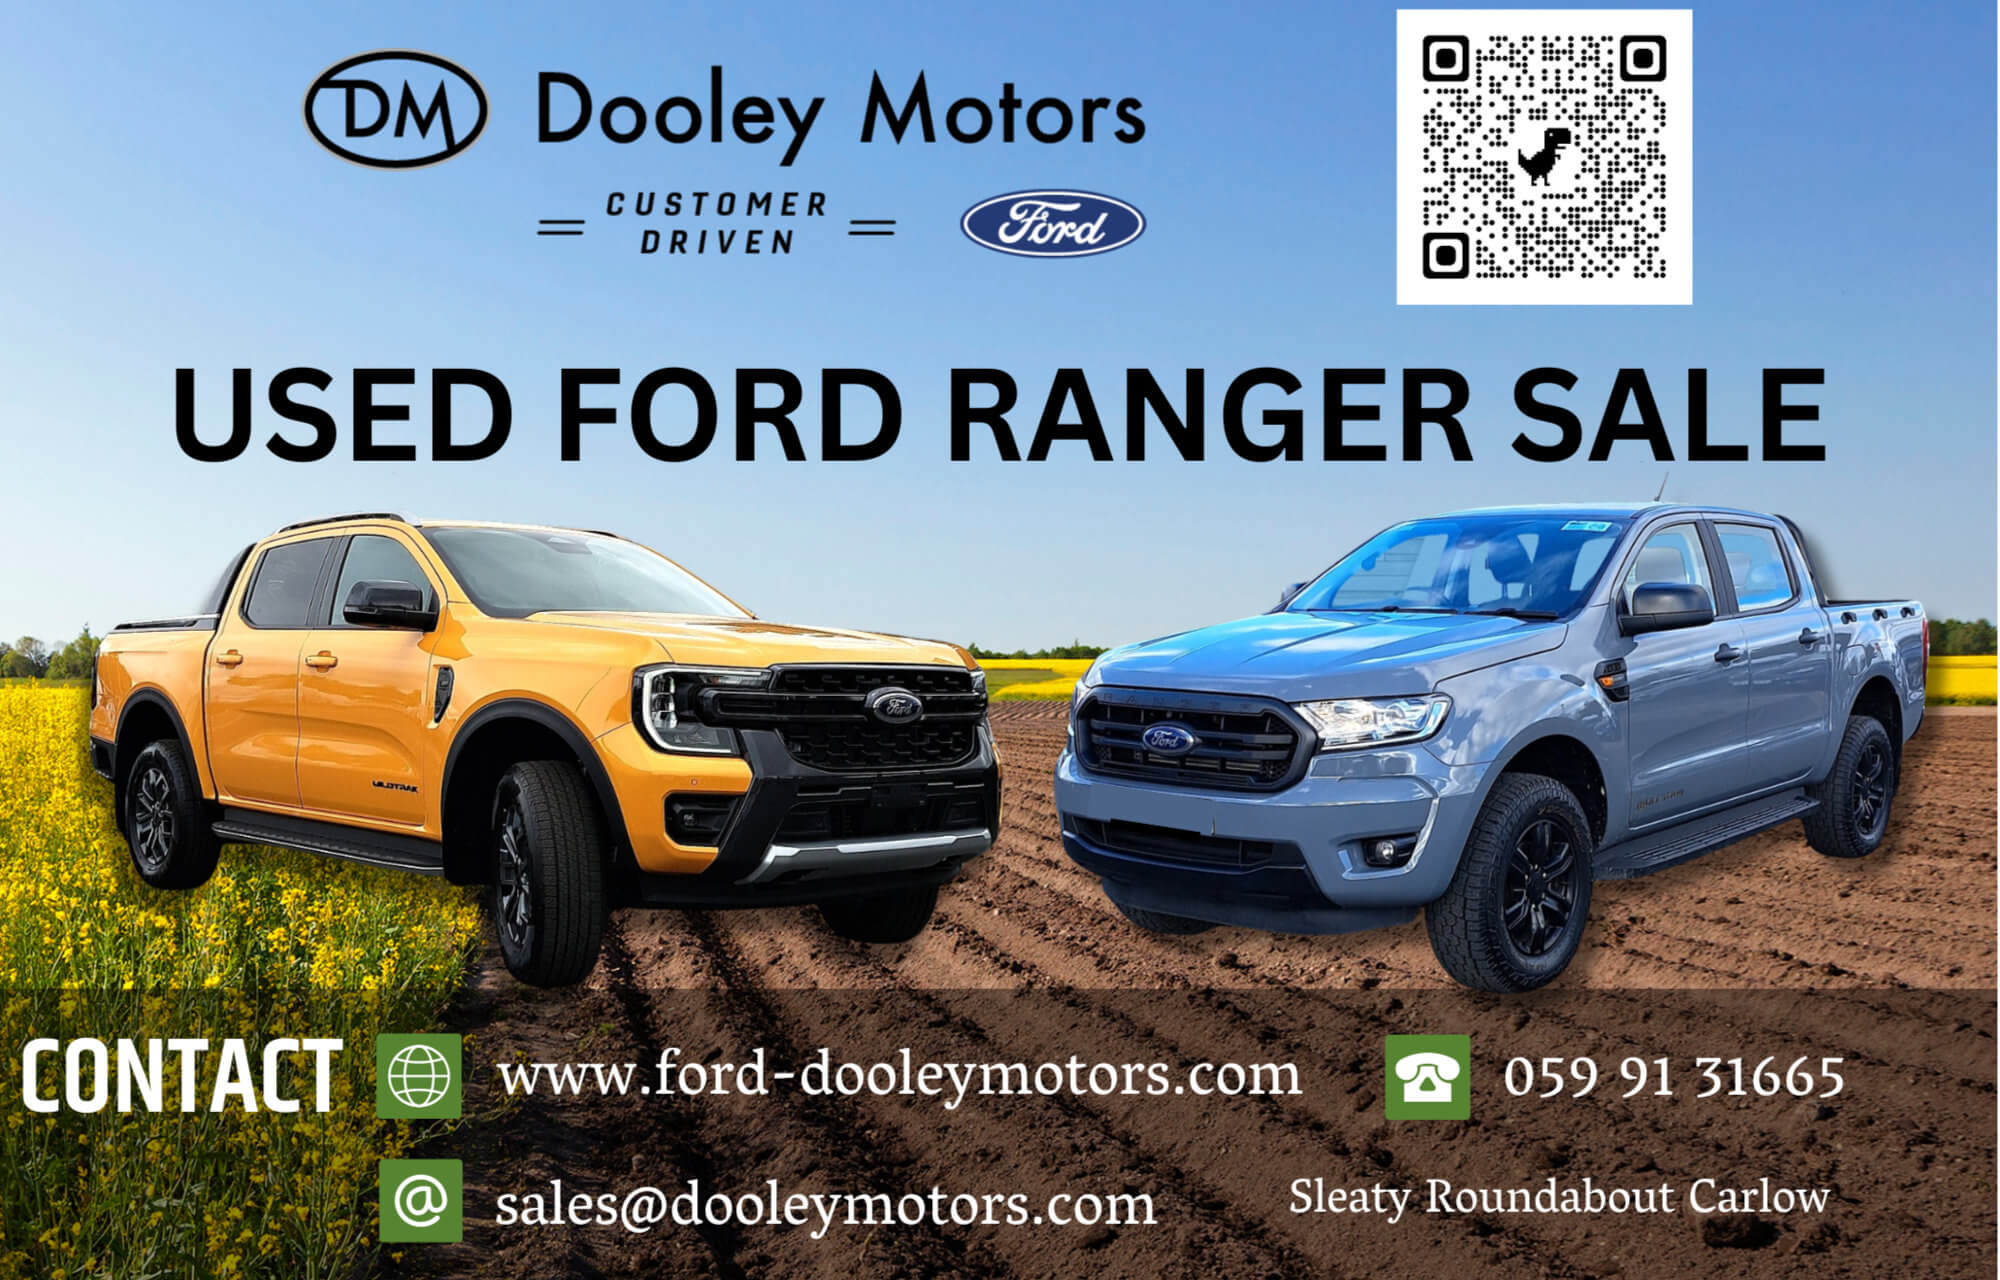 Dooley Ford Ranger event image